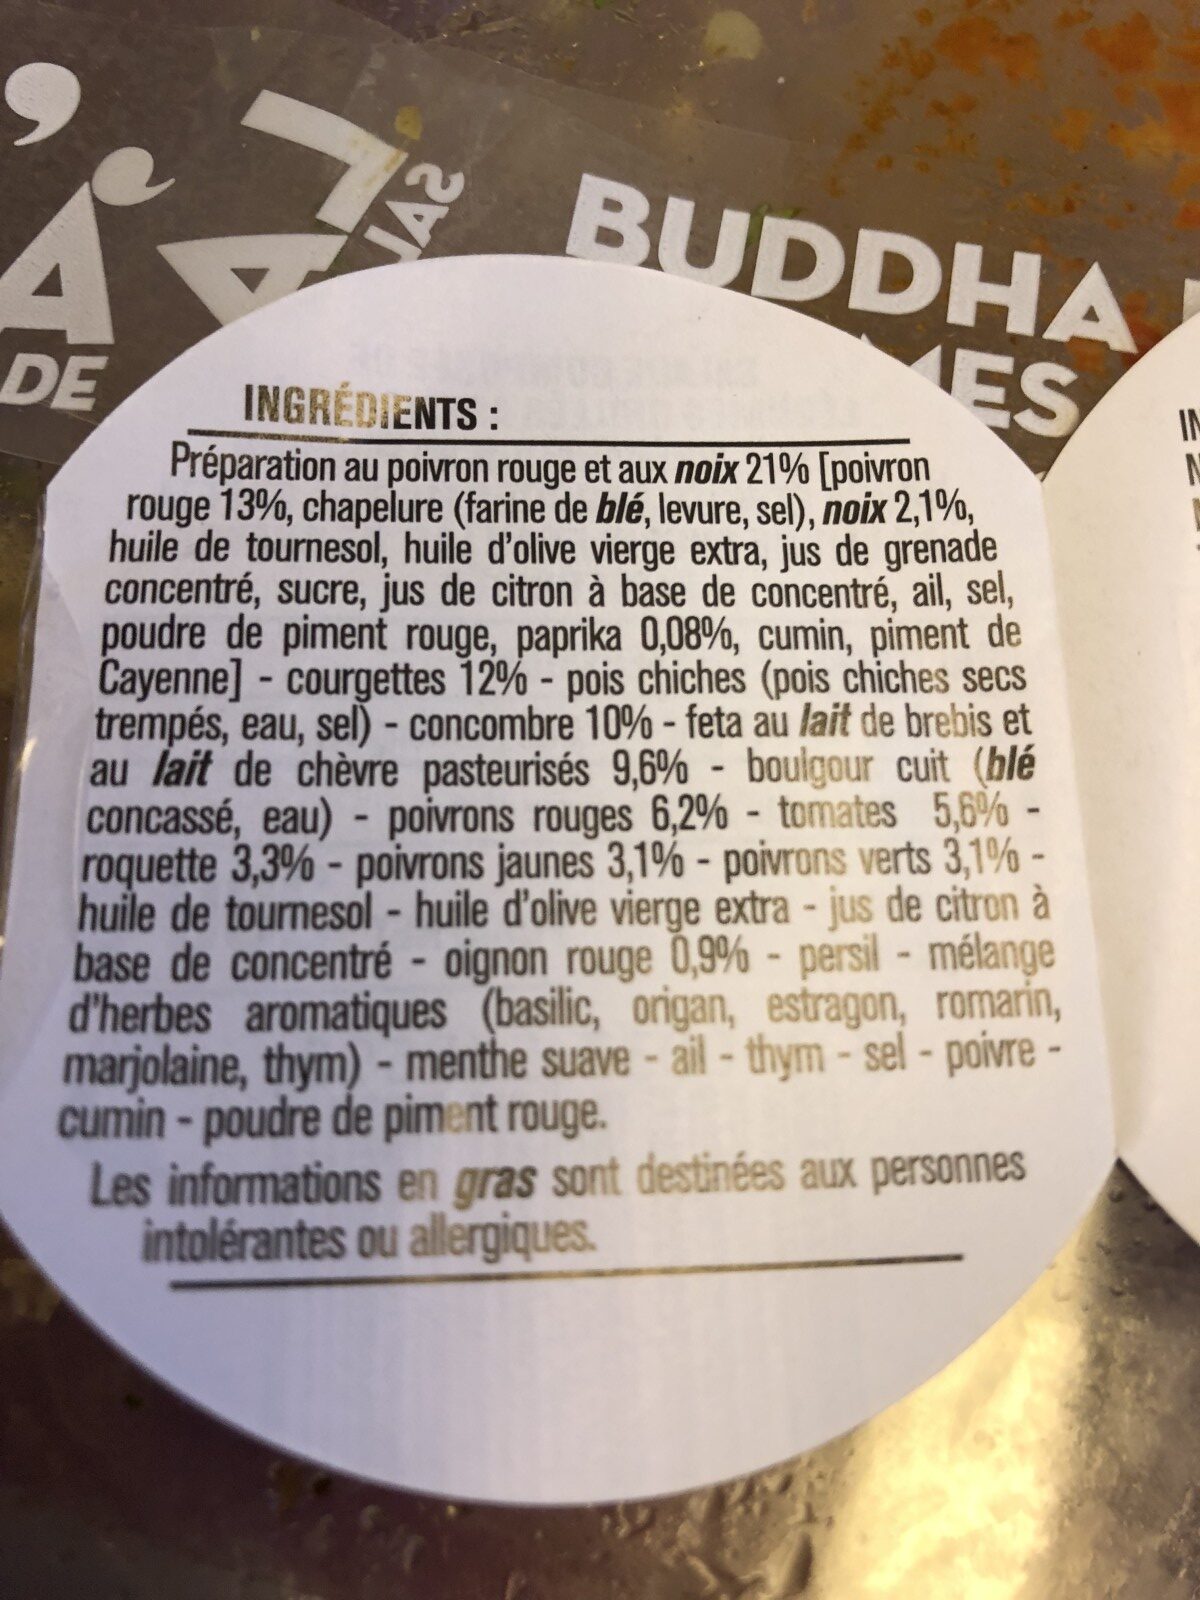 Buddha bowl legumes grillés - Ingredients - fr